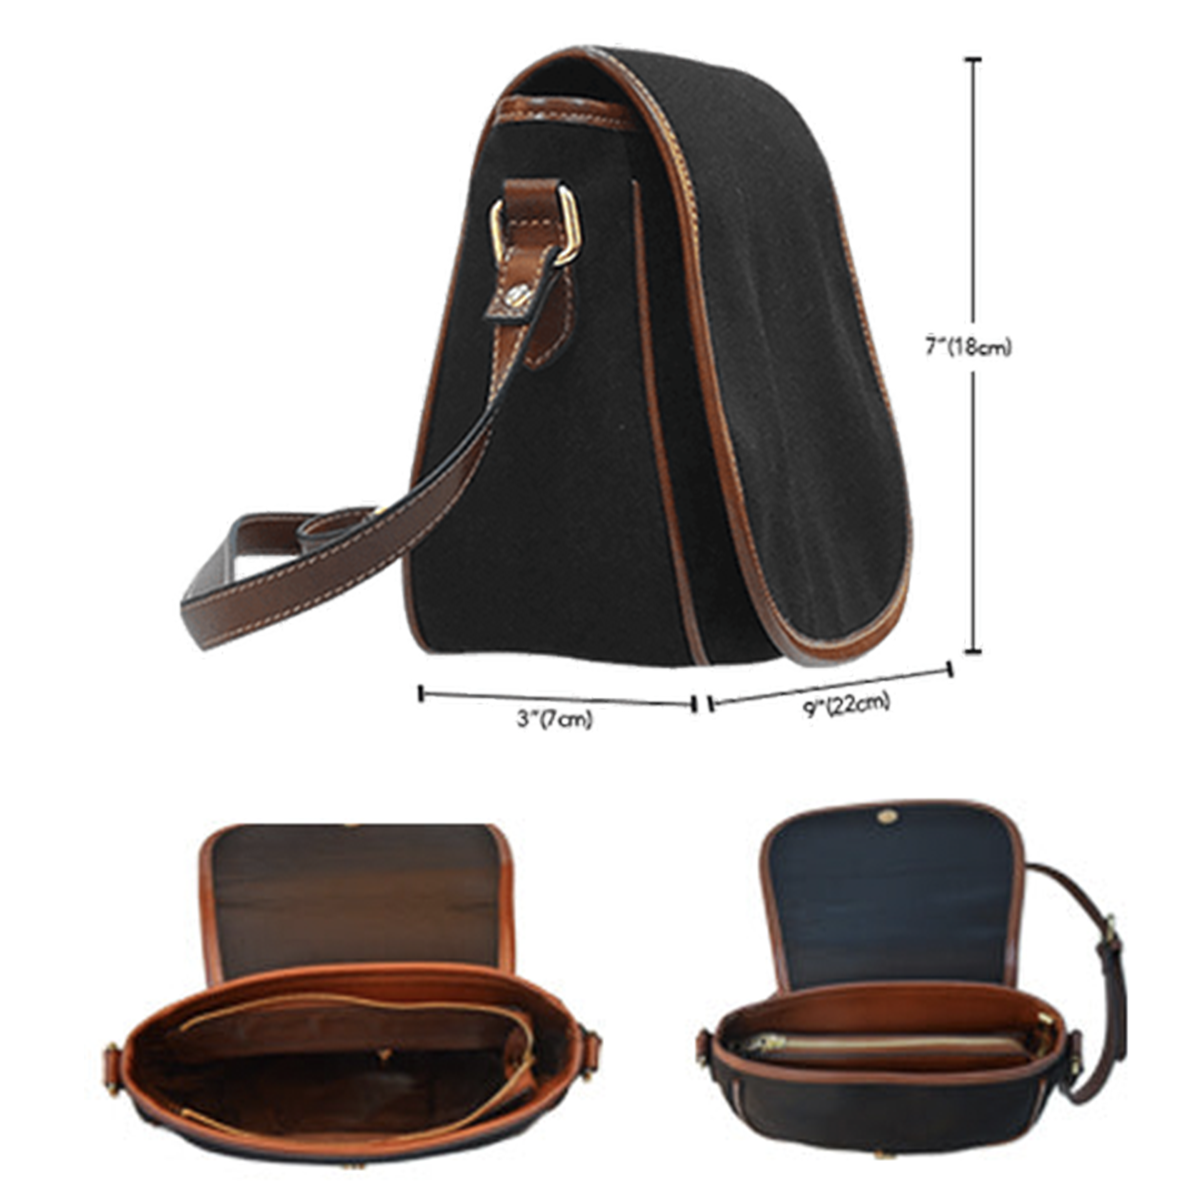 Abercrombie Modern Tartan Saddle Handbags